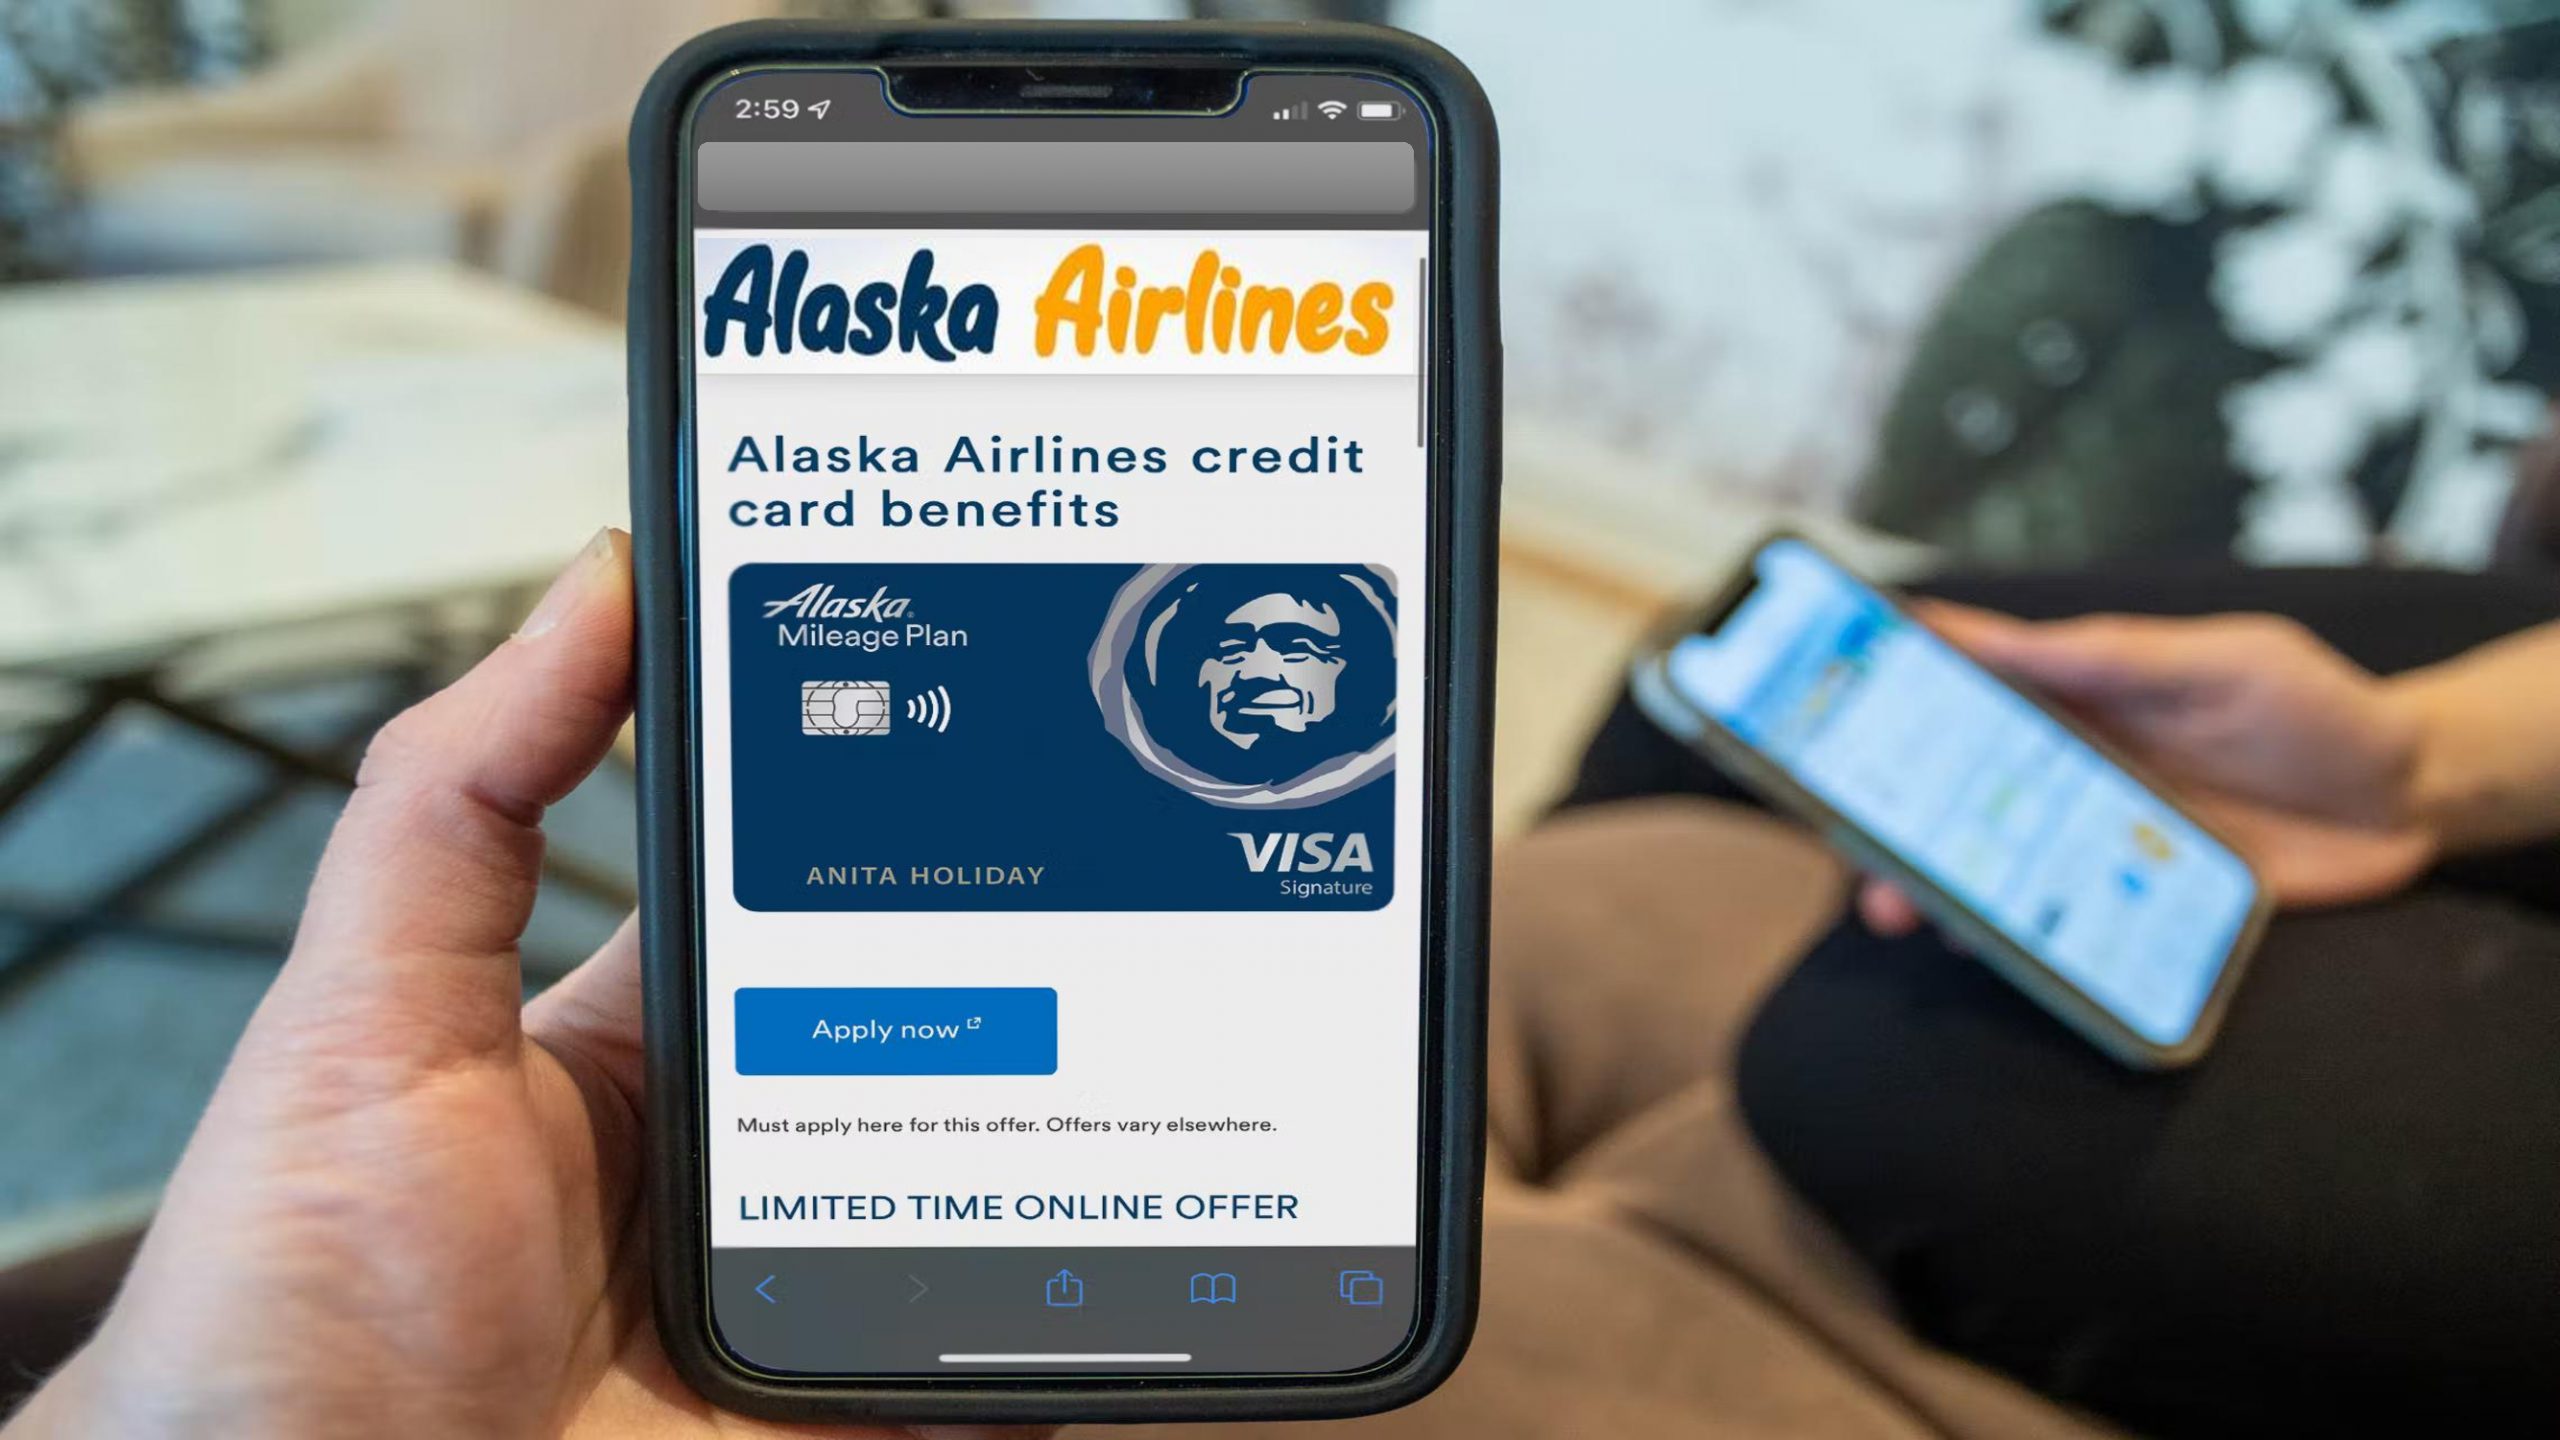 Alaska Airlines Credit Card Benefits: